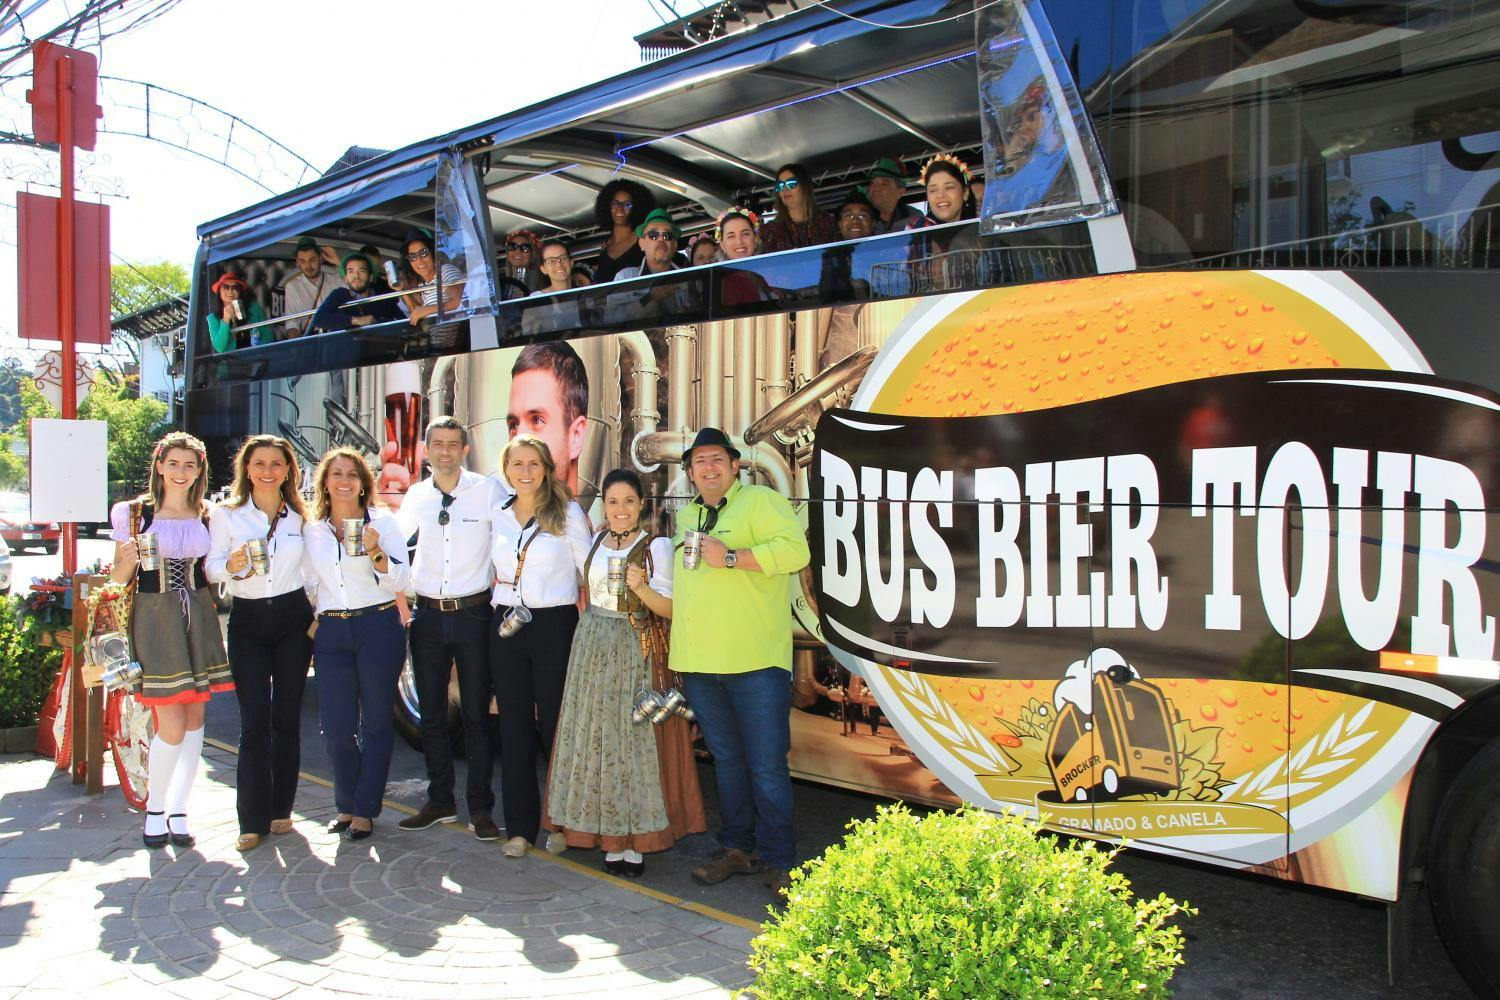 Bus tour Gramado and Canela Brazil 4.jpg